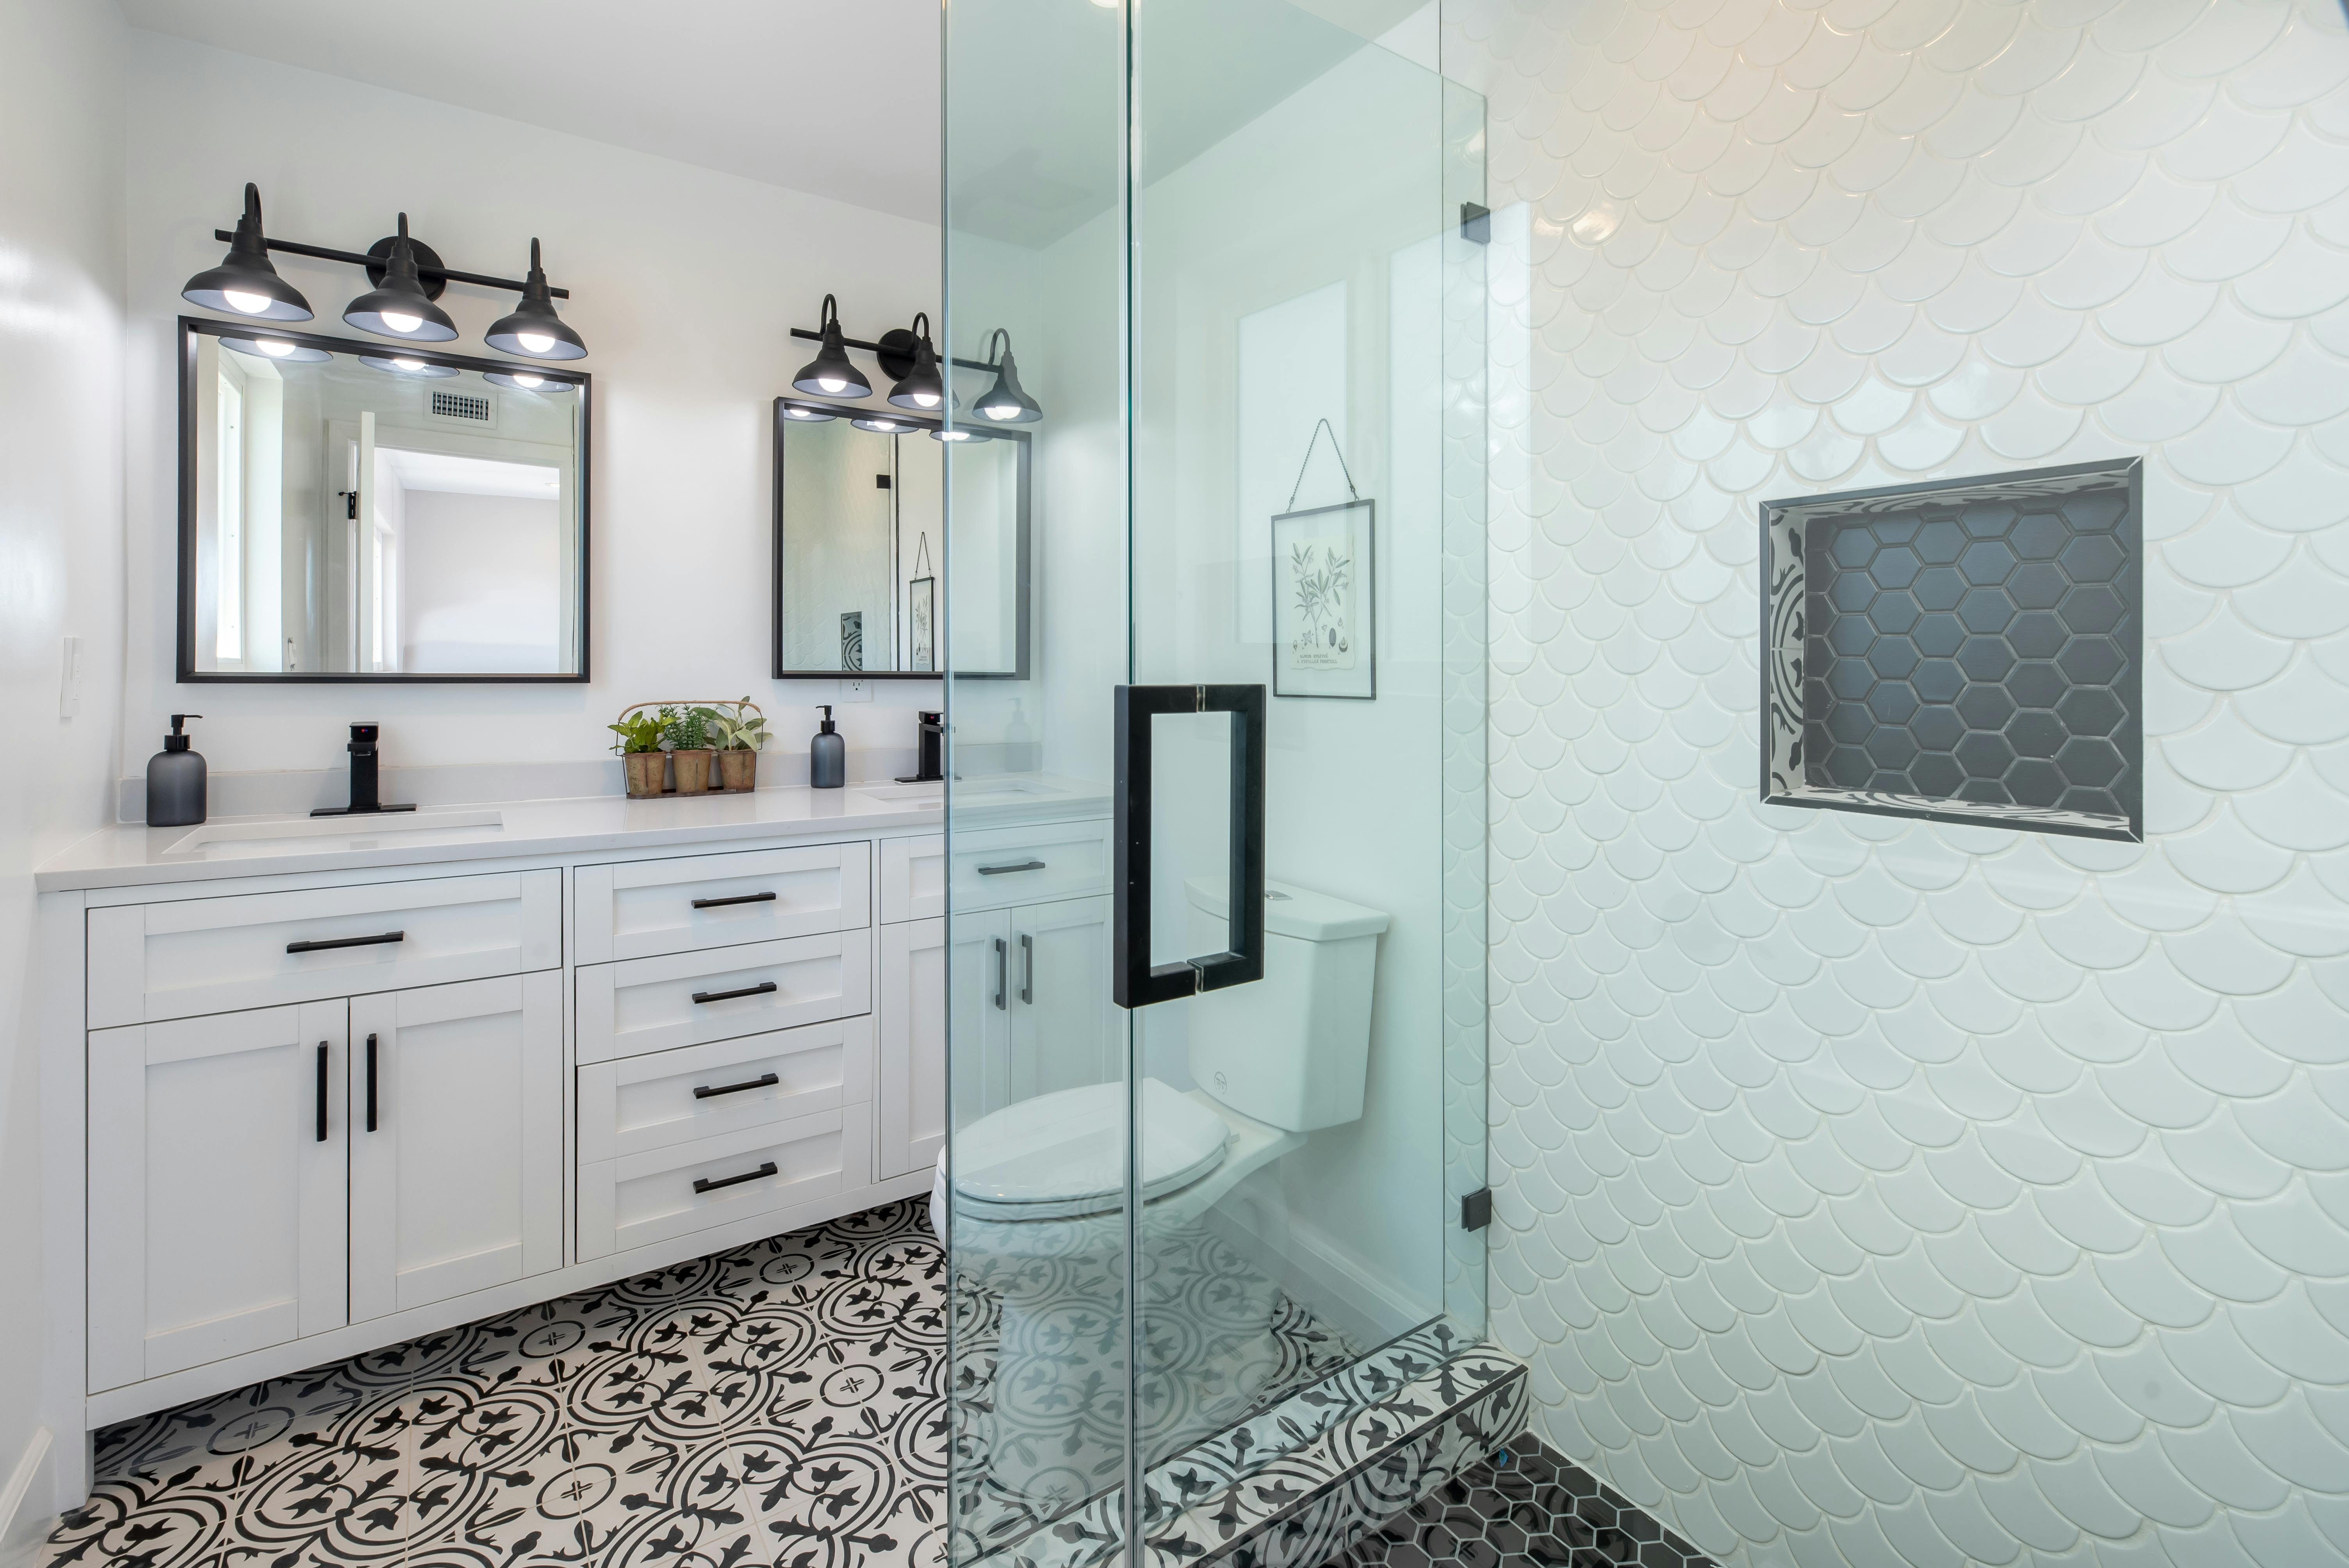 An elegant bathroom | Source: Pexels